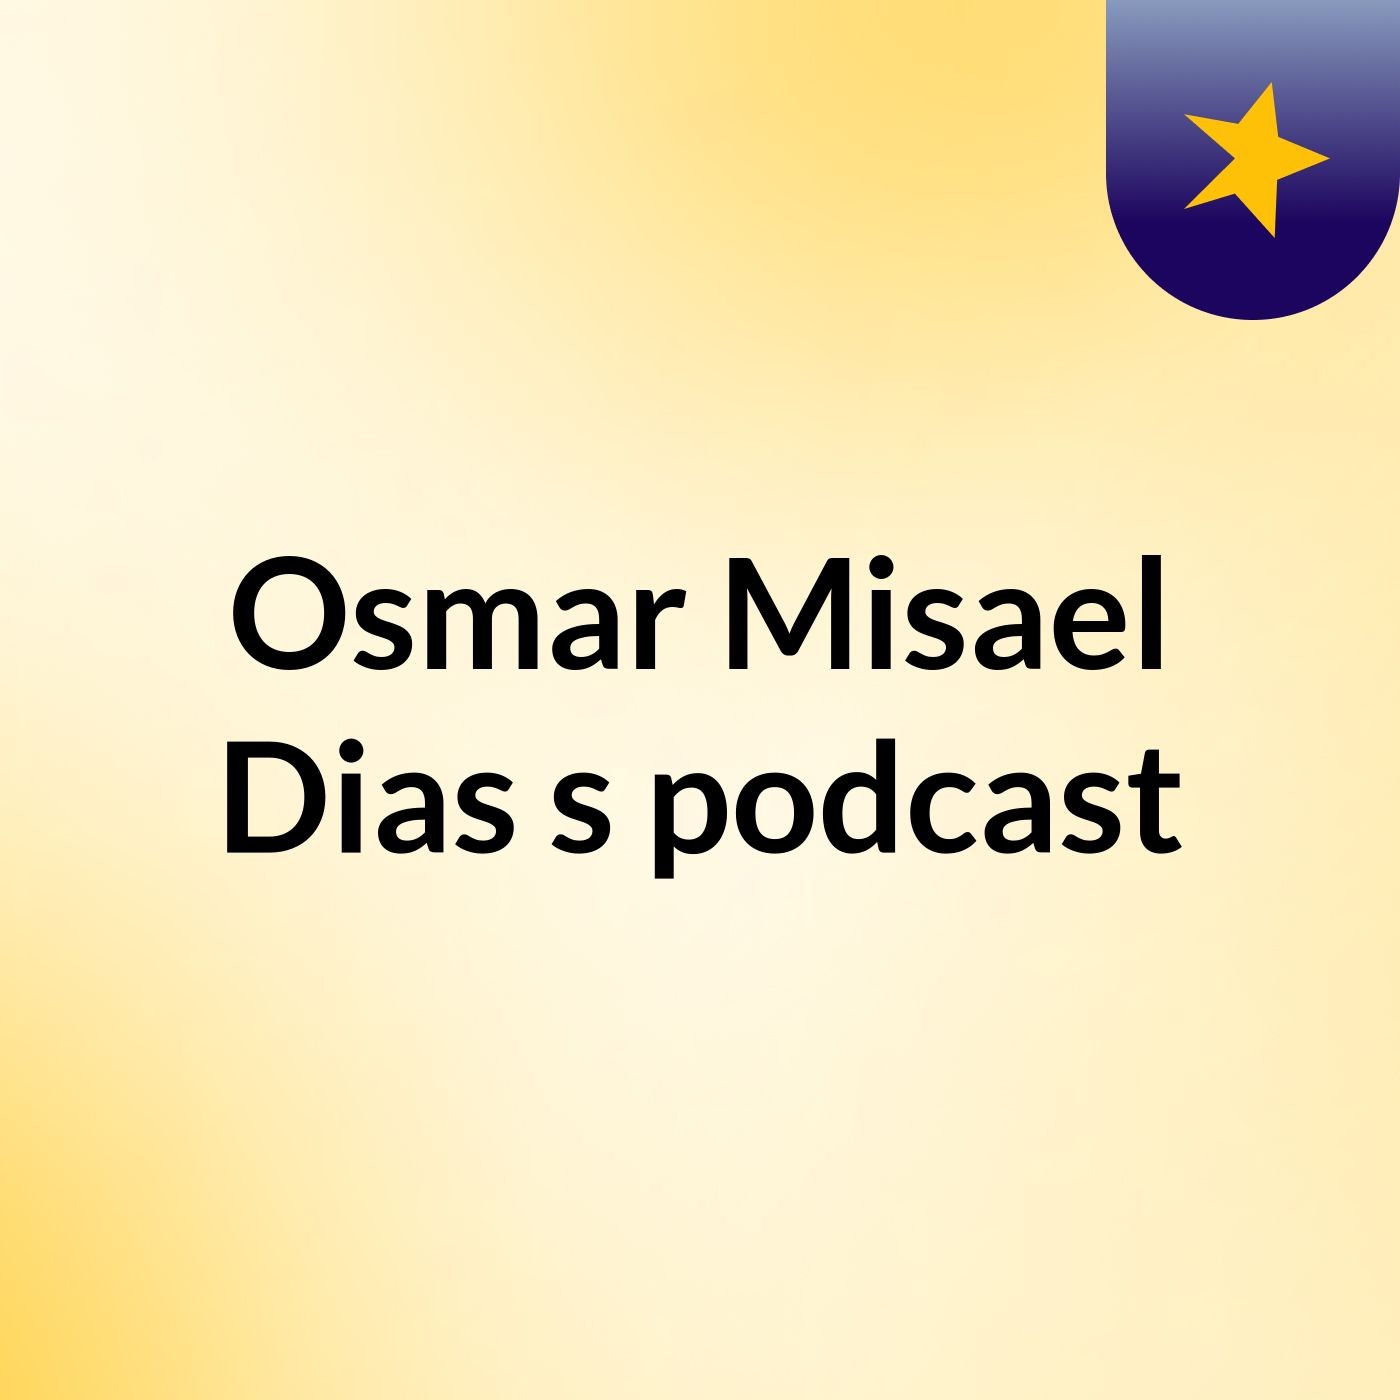 Osmar Misael Dias's podcast